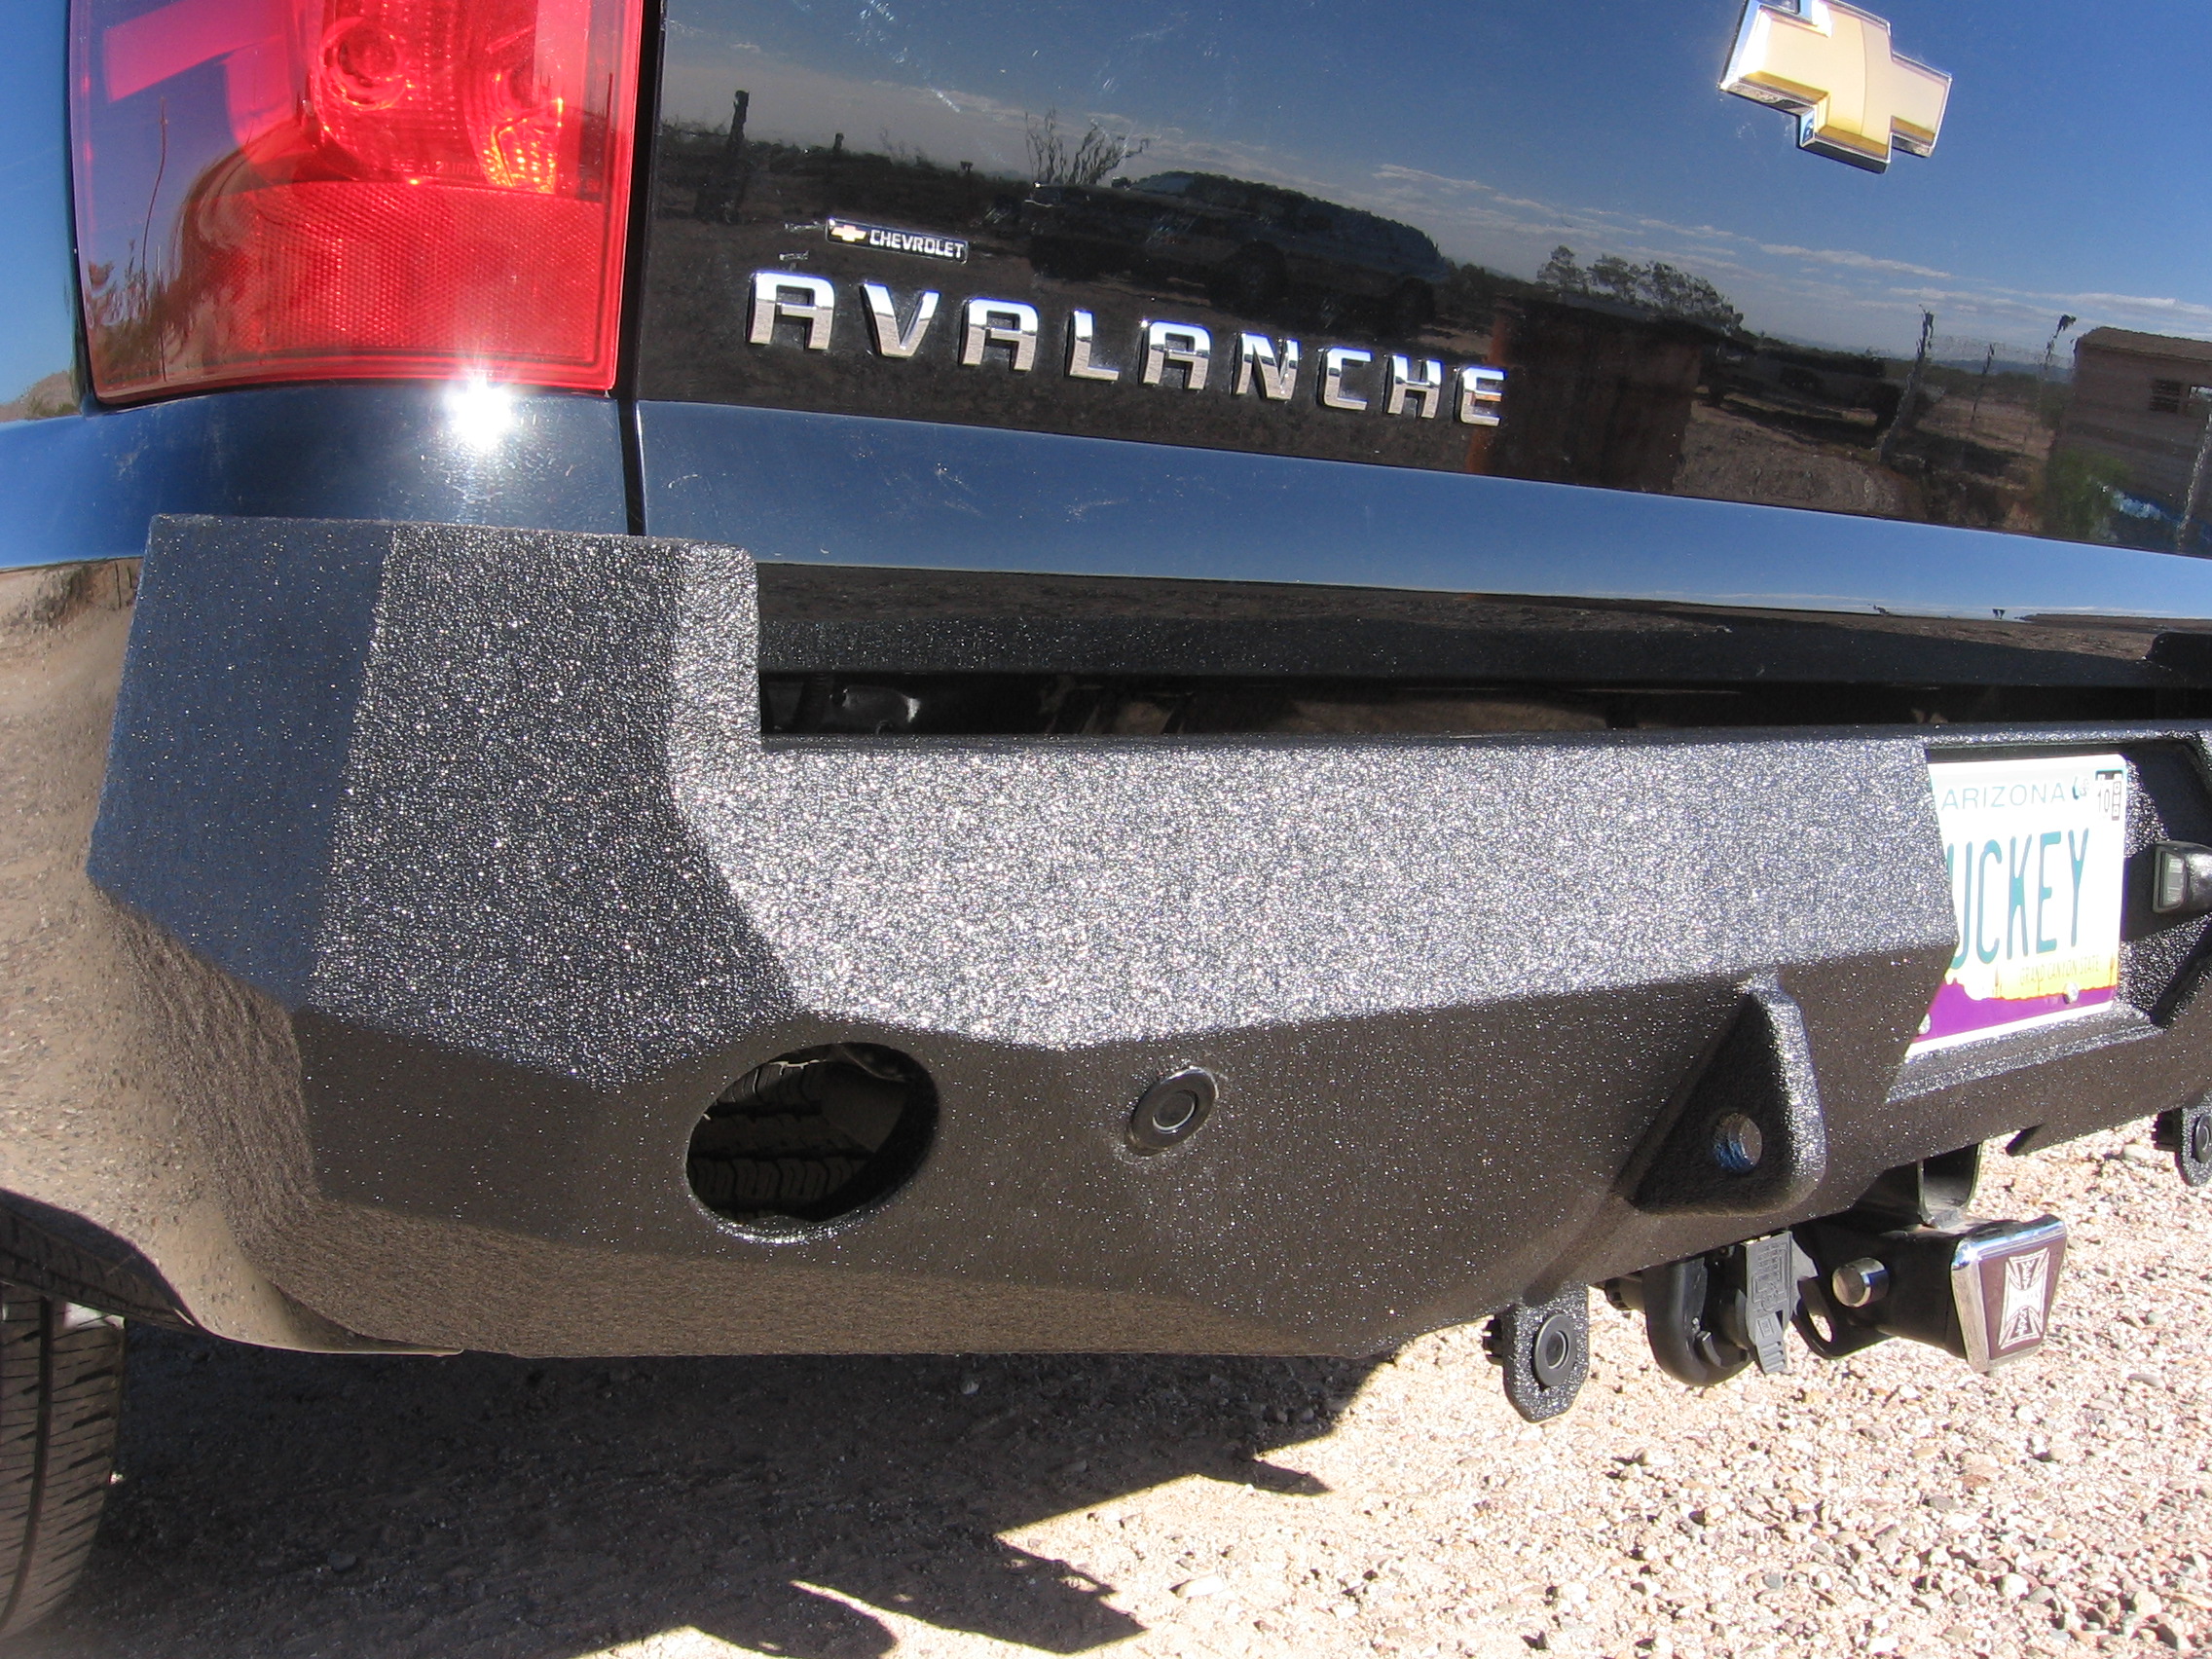 07-13 Chevrolet Avalanche rear base bumper